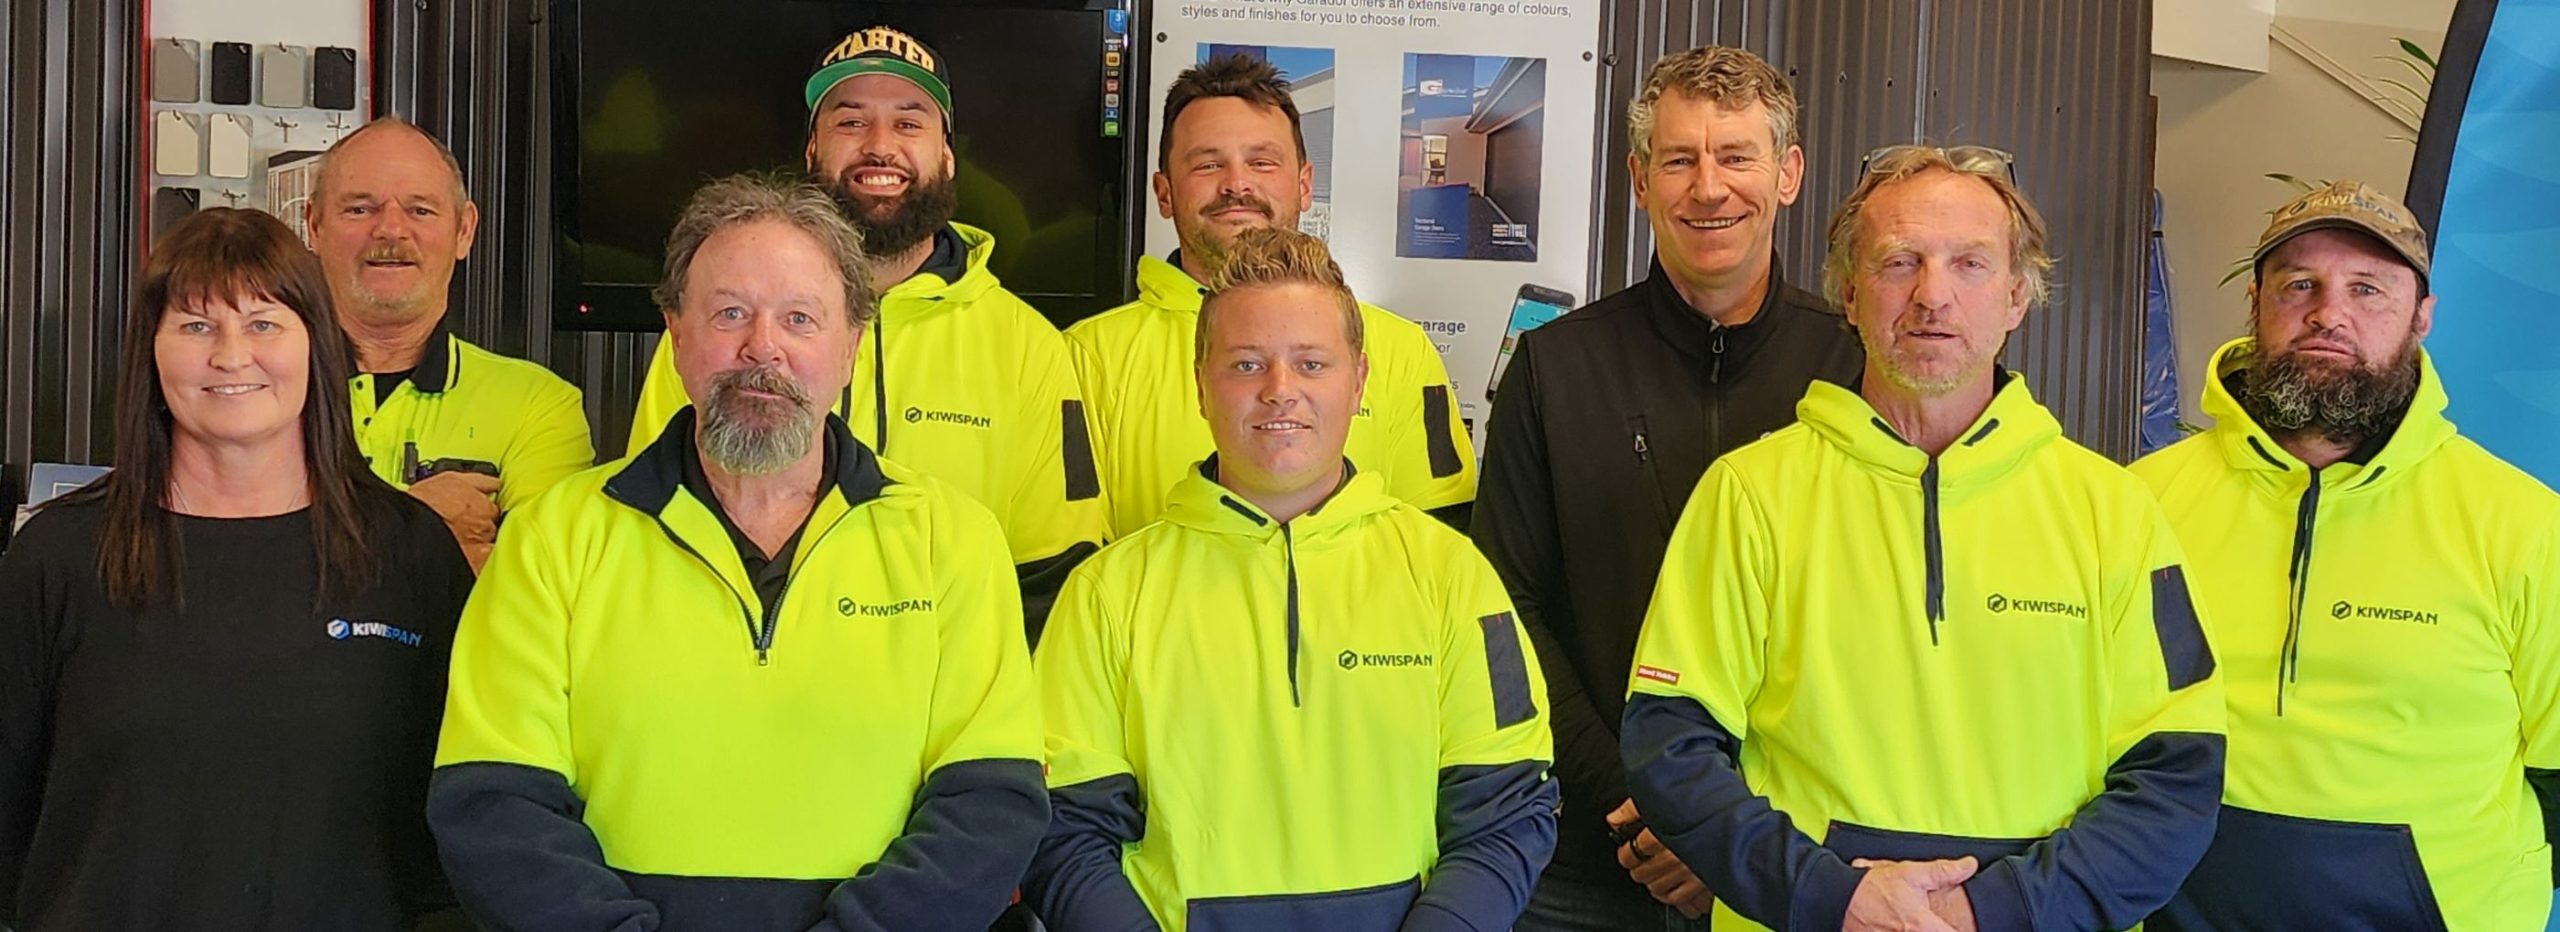 An image of the KiwiSpan Wellington team